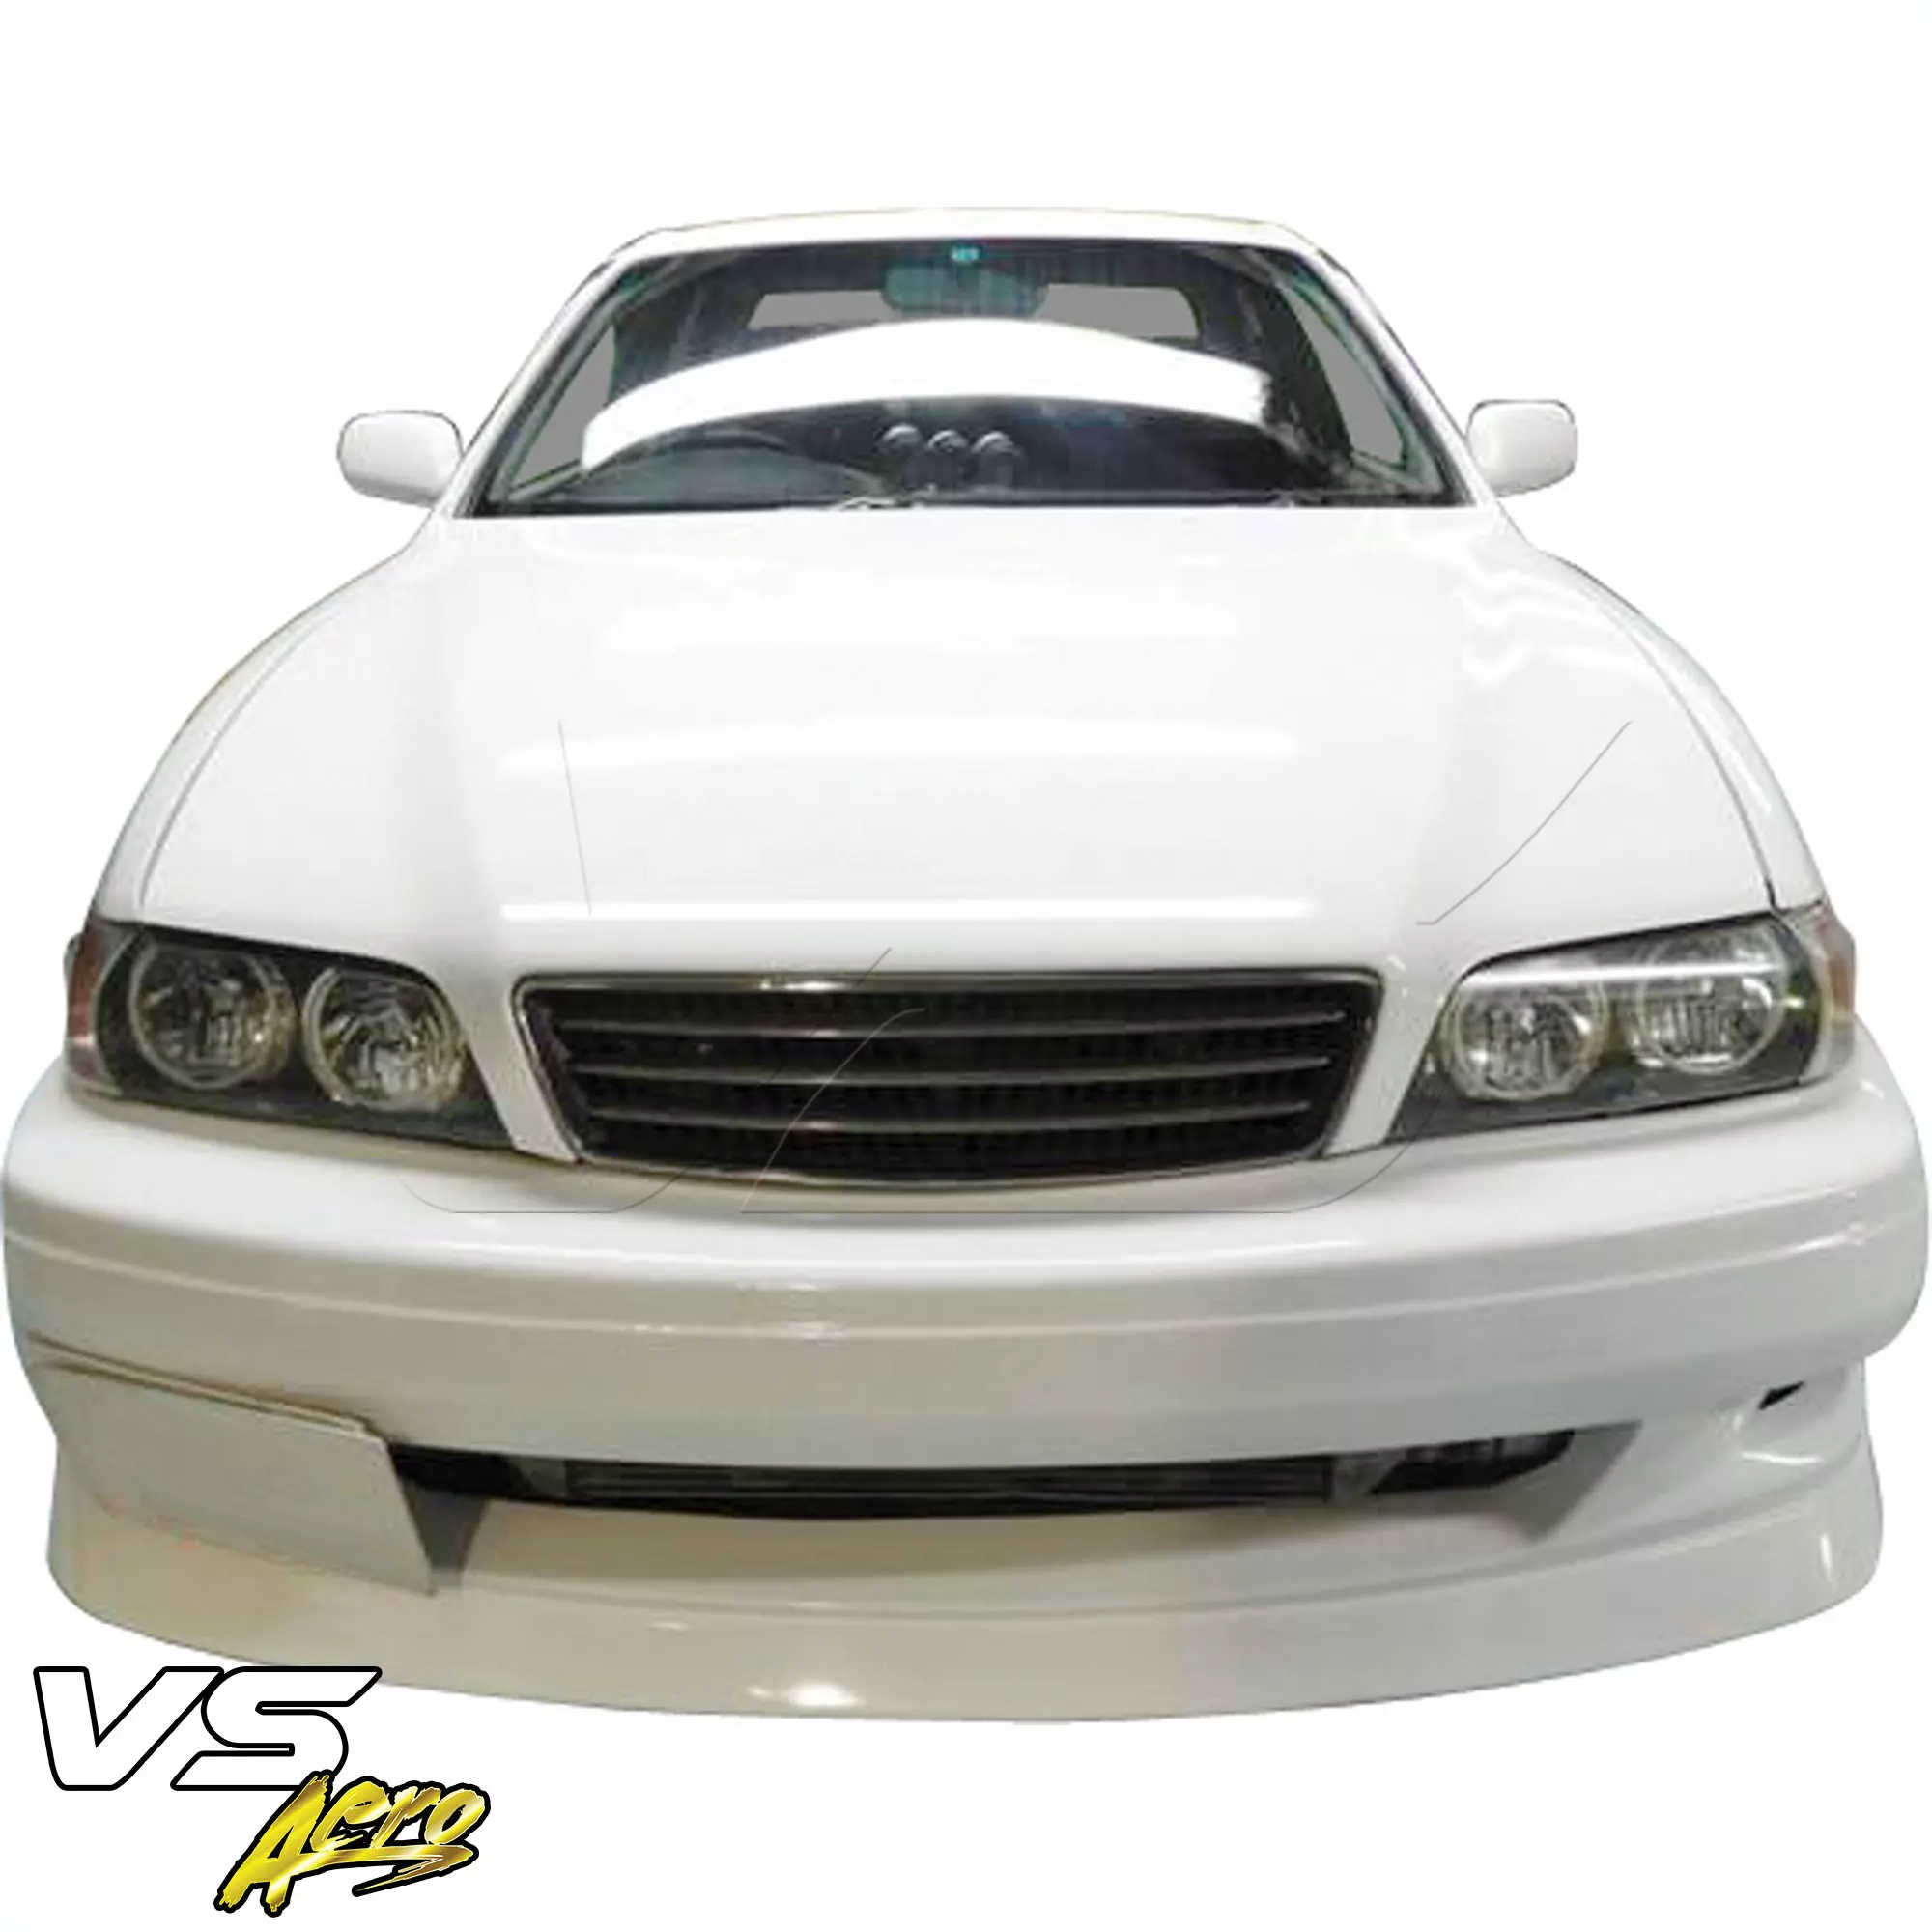 VSaero FRP URA vL Body Kit 4pc > Toyota Chaser JZX100 1996-2000 - Image 26